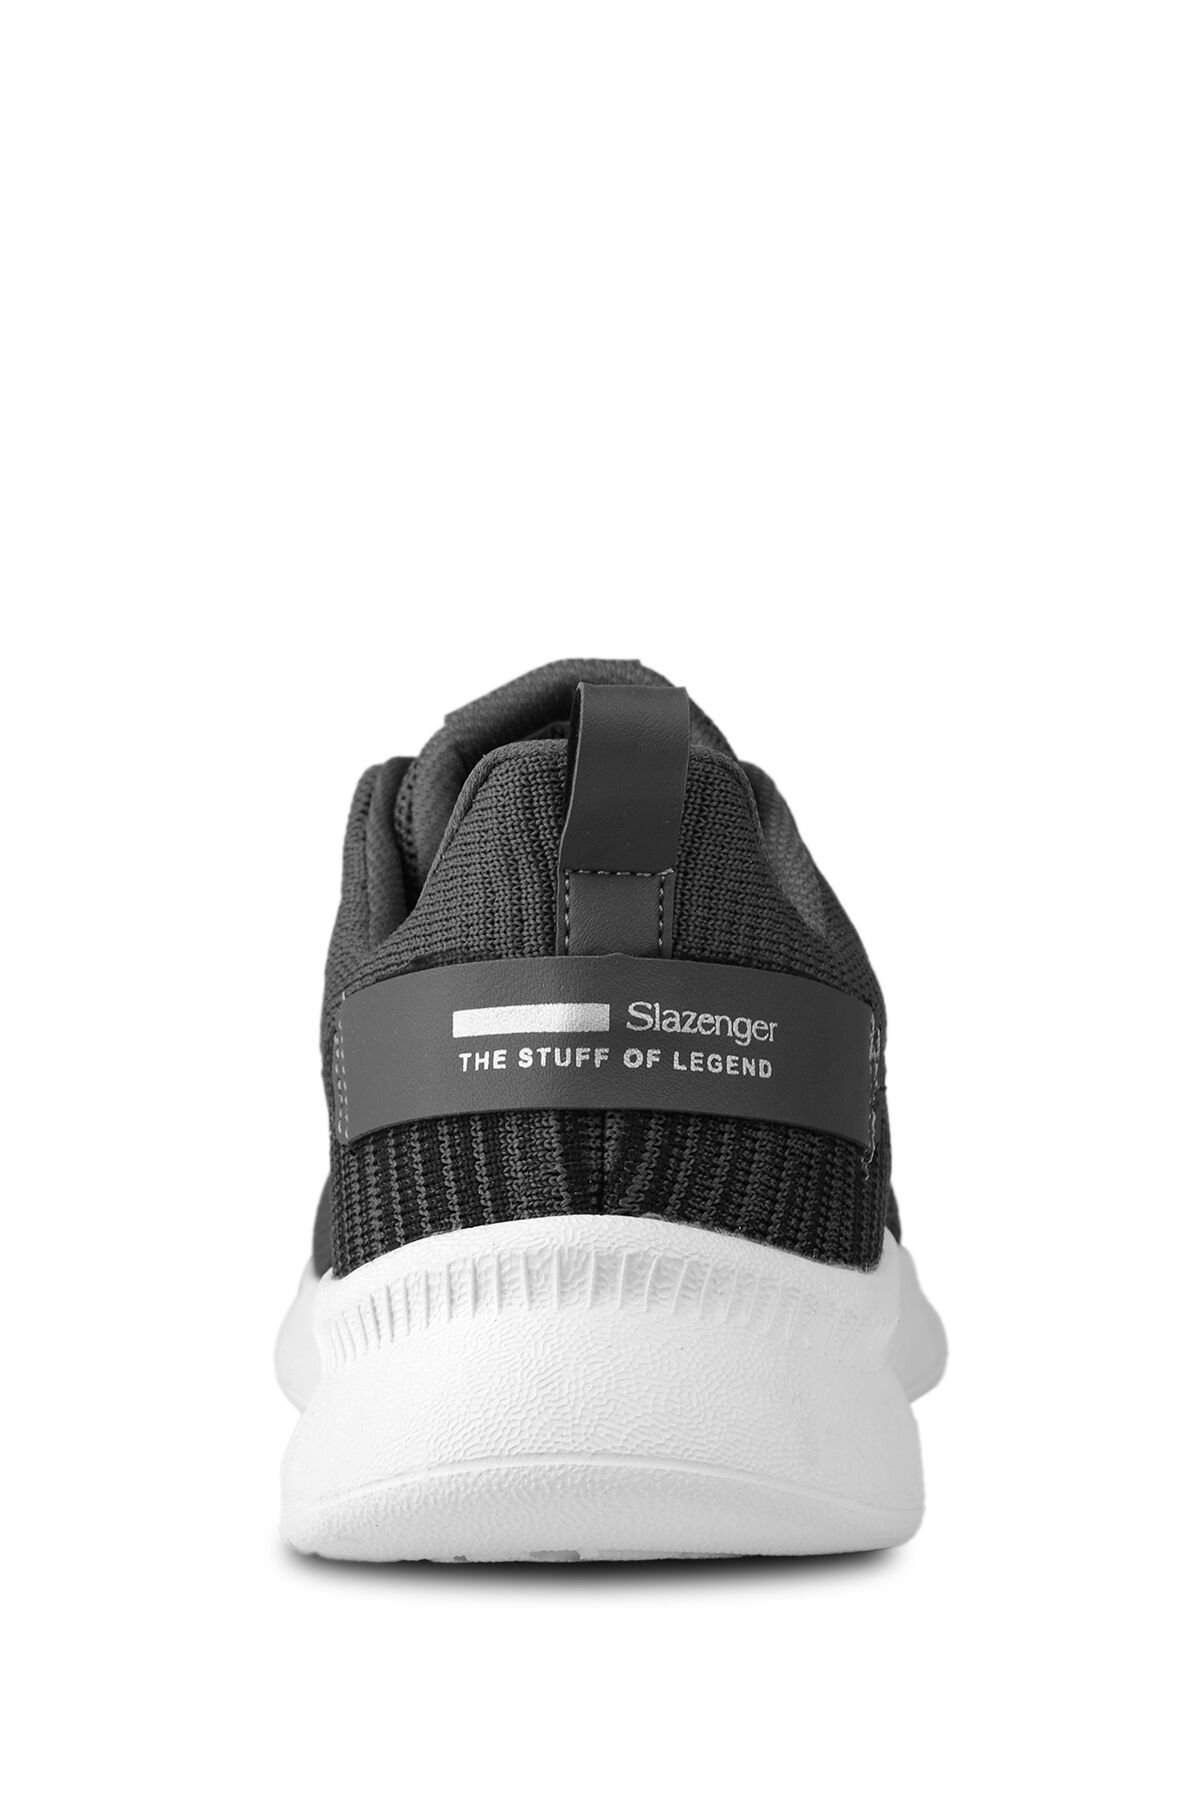 Slazenger ADELBERT I Sneaker Erkek Ayakkabı Koyu Gri - Thumbnail